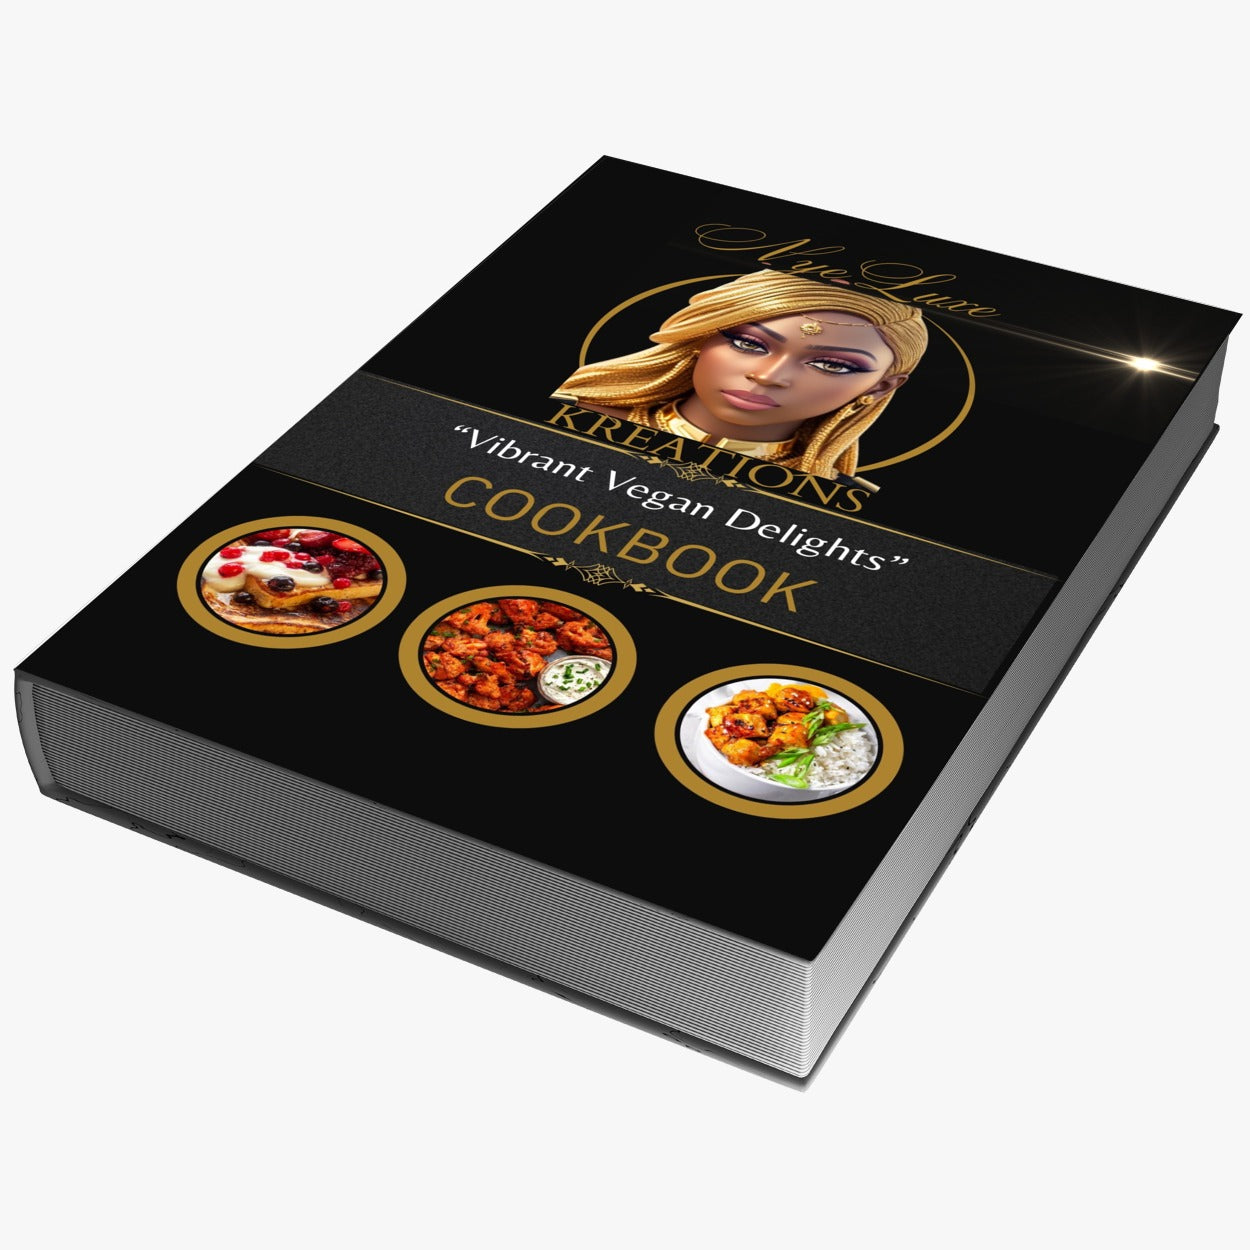 Nyeluxe Kreations Vibrant Vegan Delights Cookbook